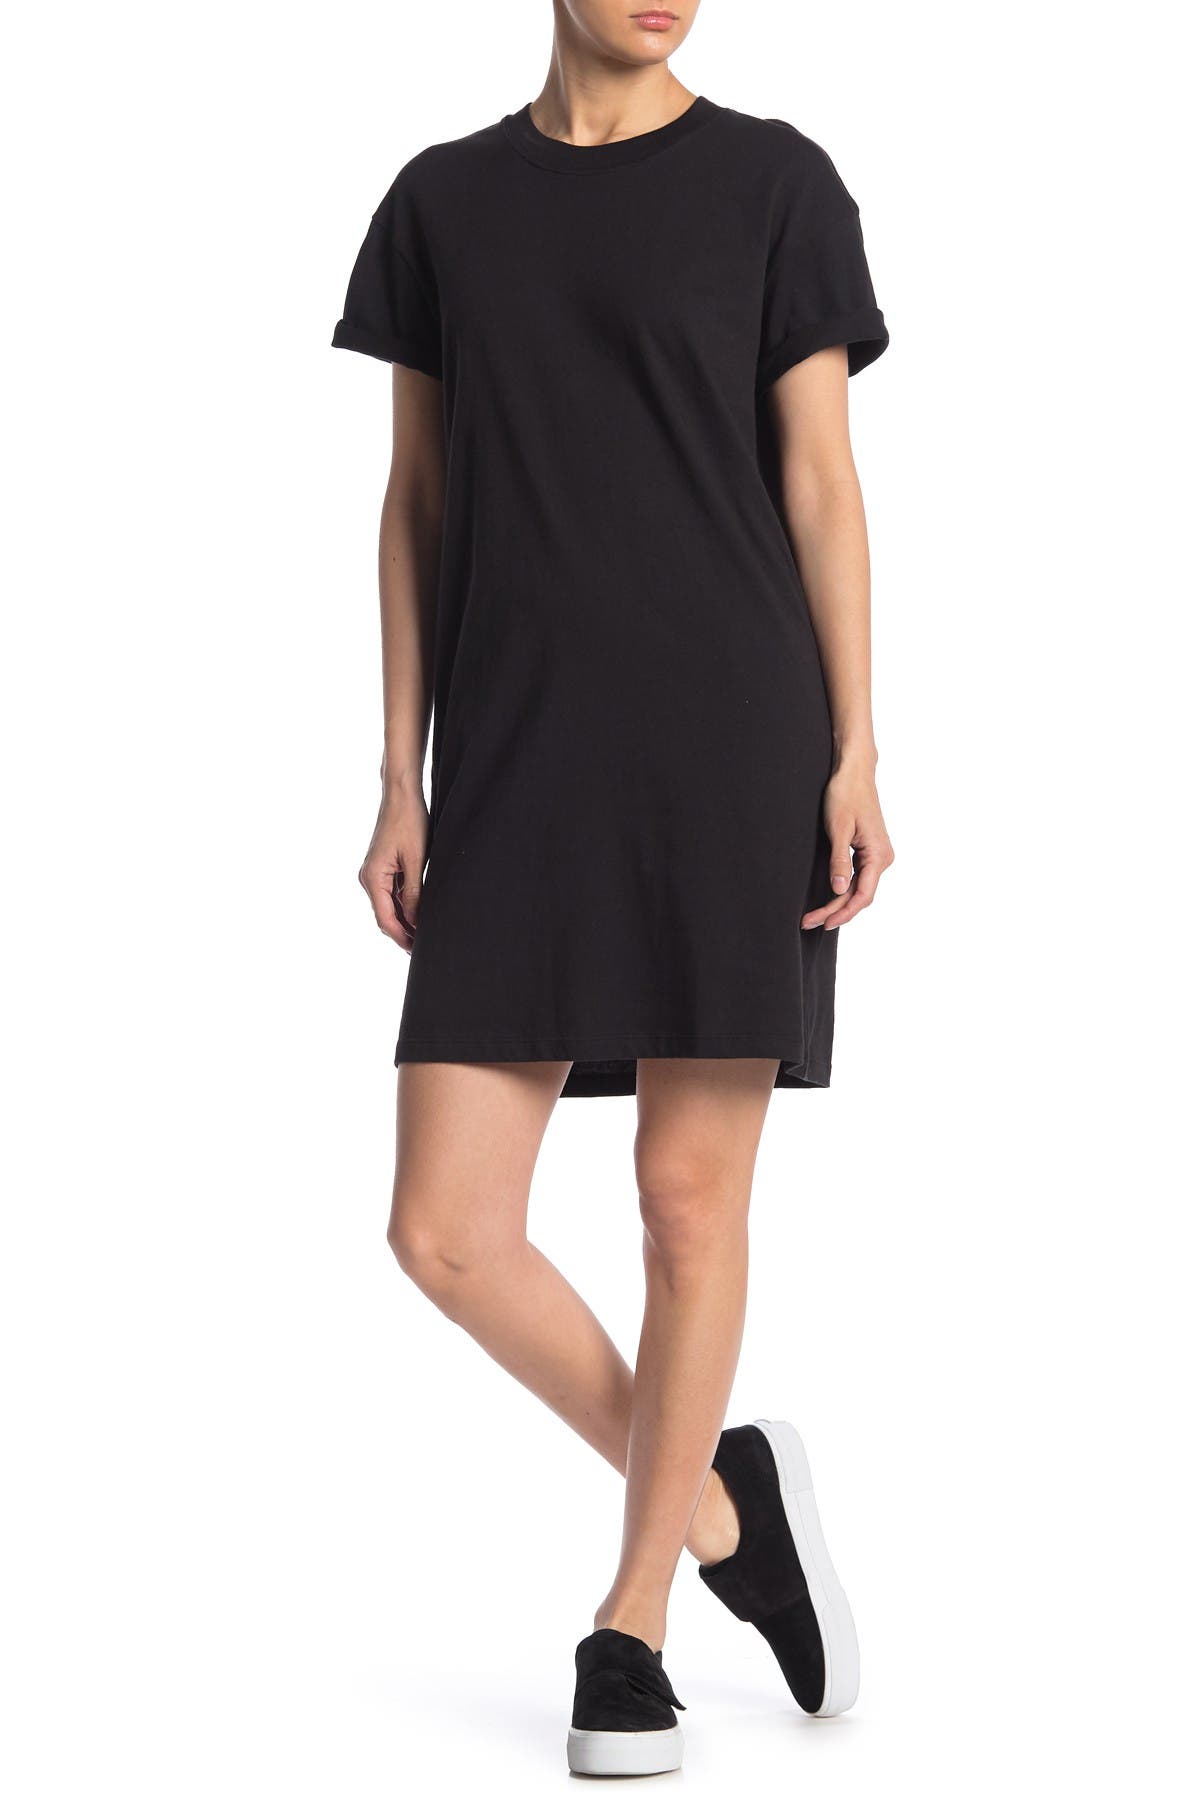 Madewell Tina T-Shirt Dress | Nordstrom